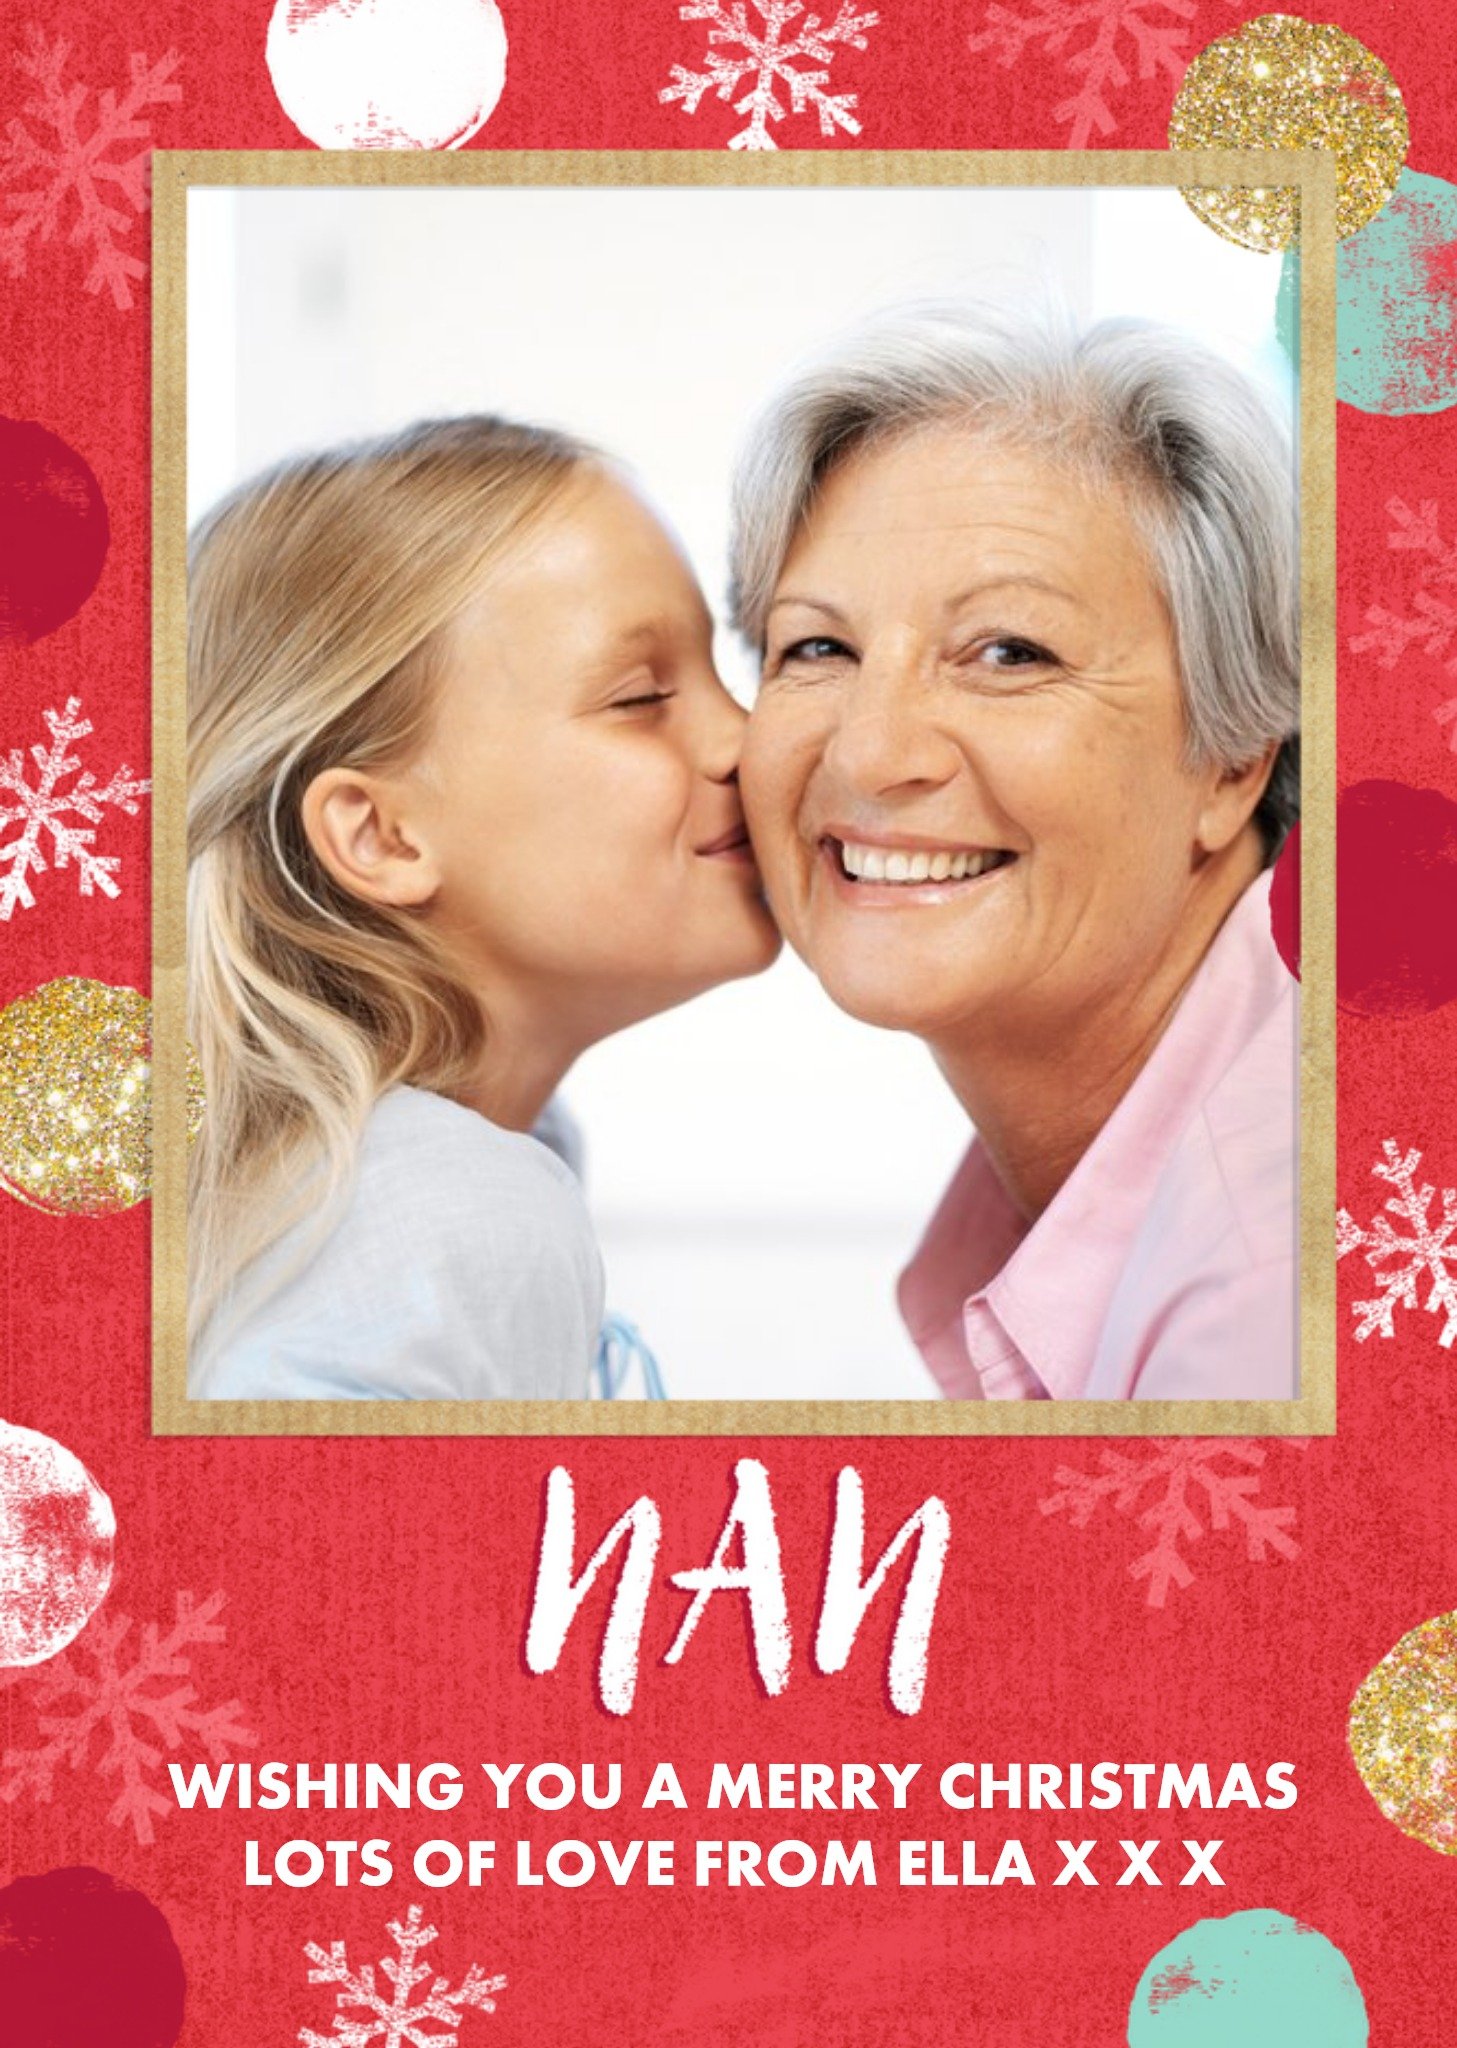 Moonpig Wrapped Up Photo Upload Christmas Card Nan Wishing You A Merry Christmas, Large